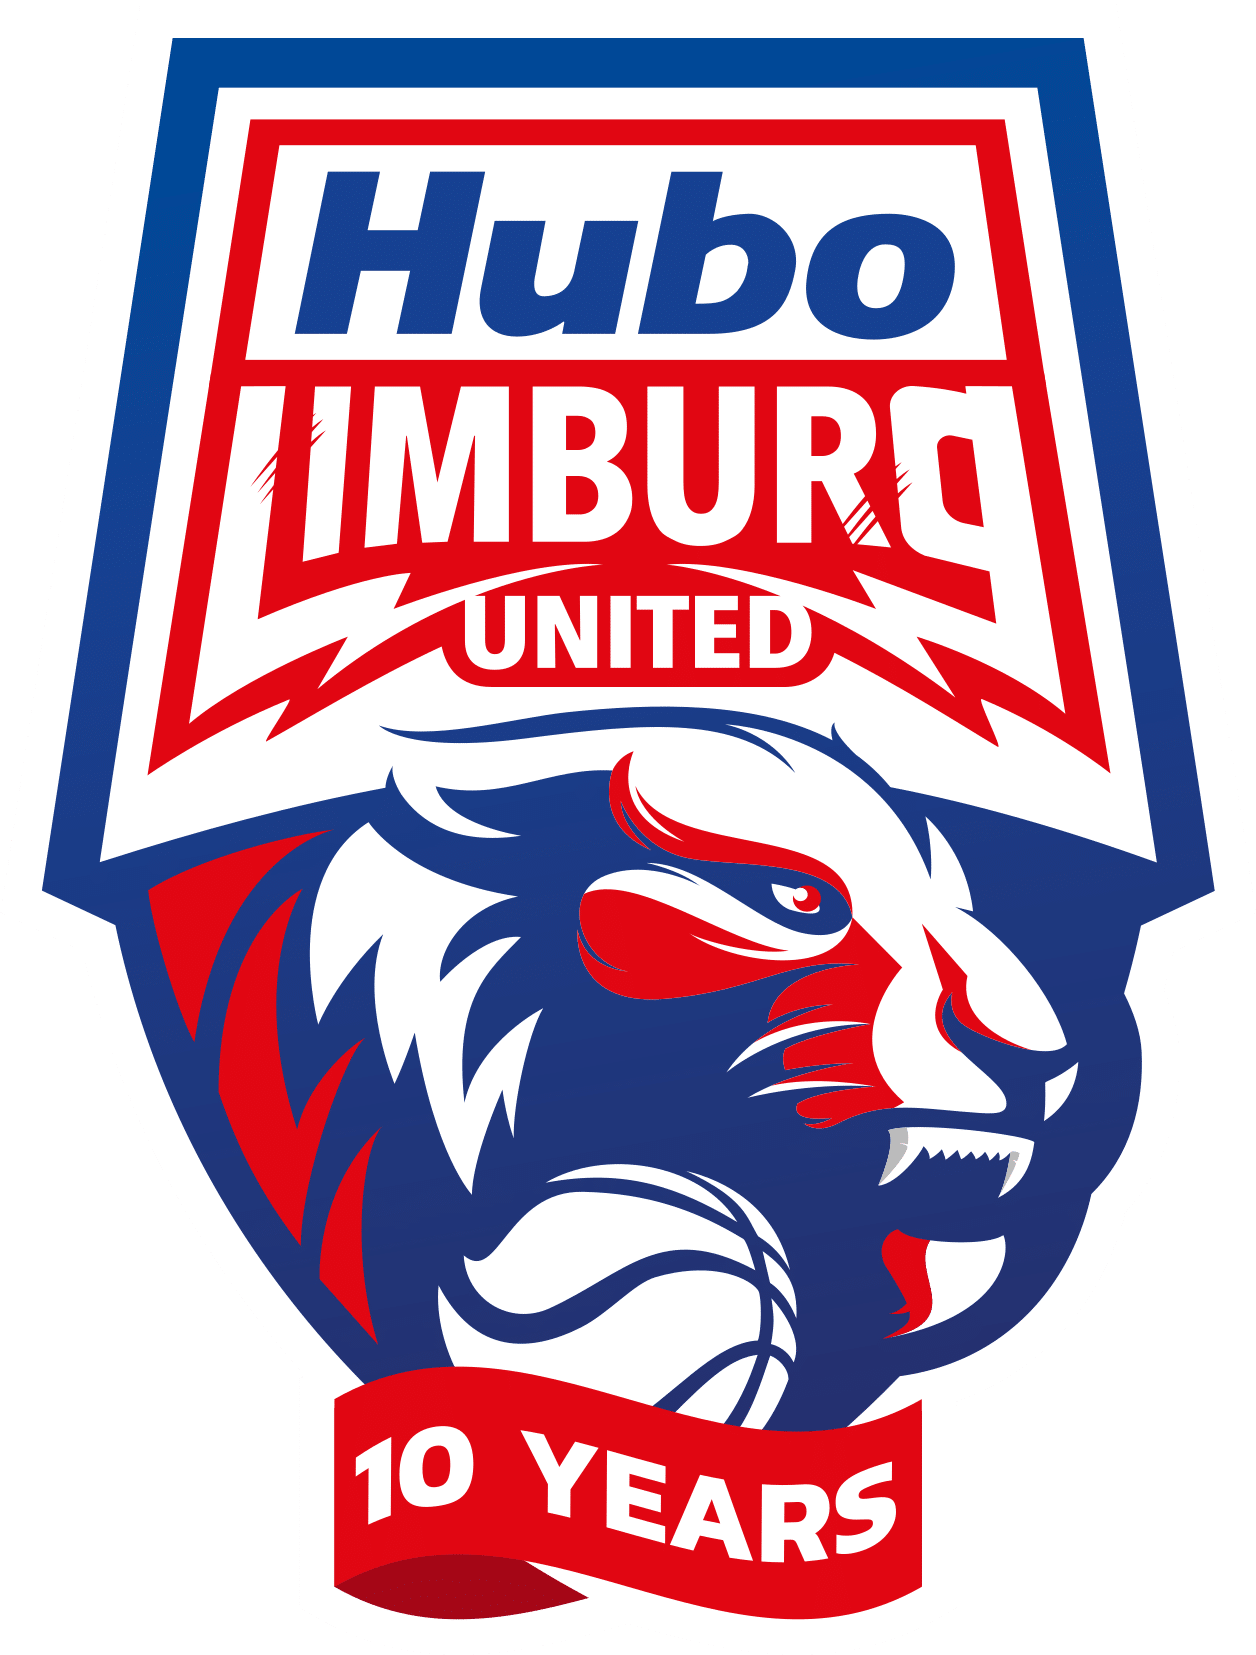 Hubo Limburg United-team-logo